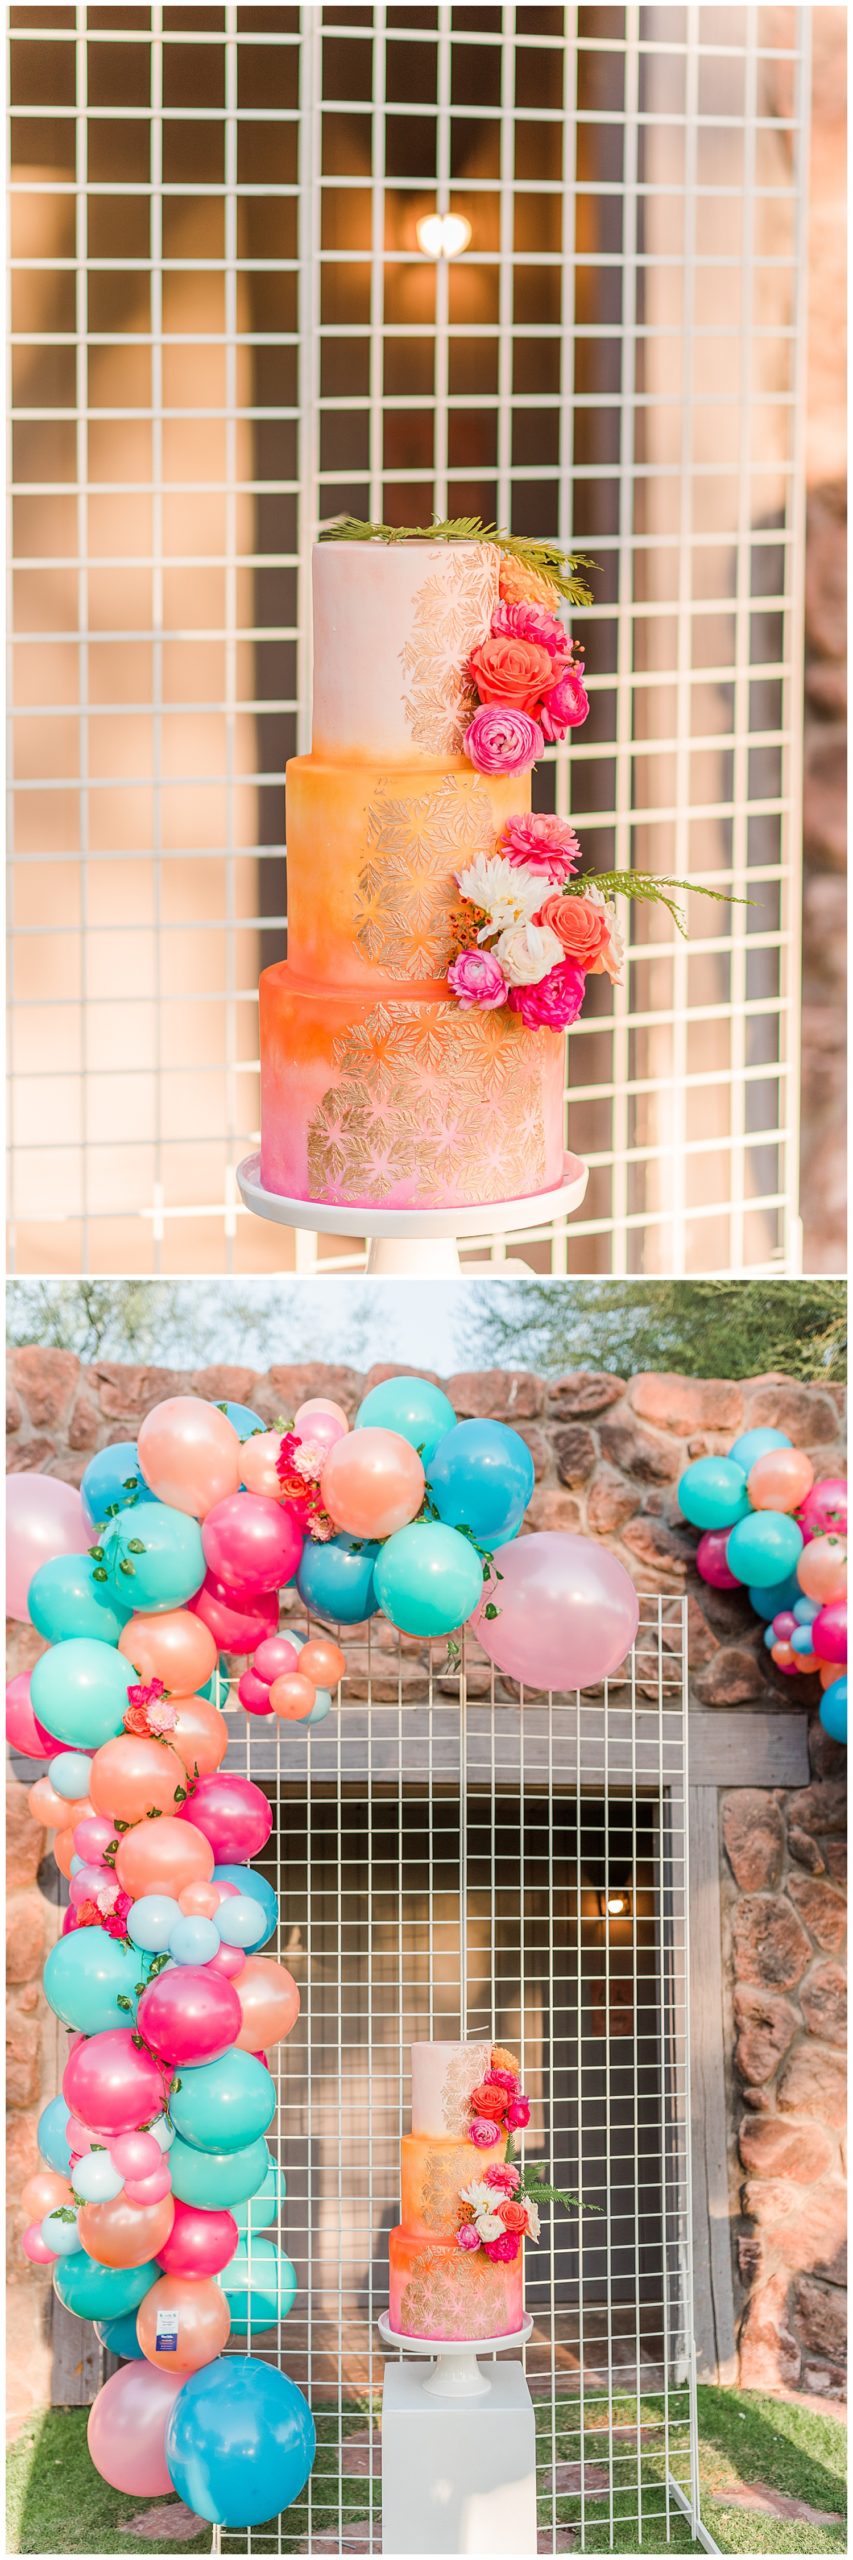 wedding+inspo+New+Mexico+wedding+photographer+vibrant+wedding+tropical+wedding+decor+palm+cake+balloons